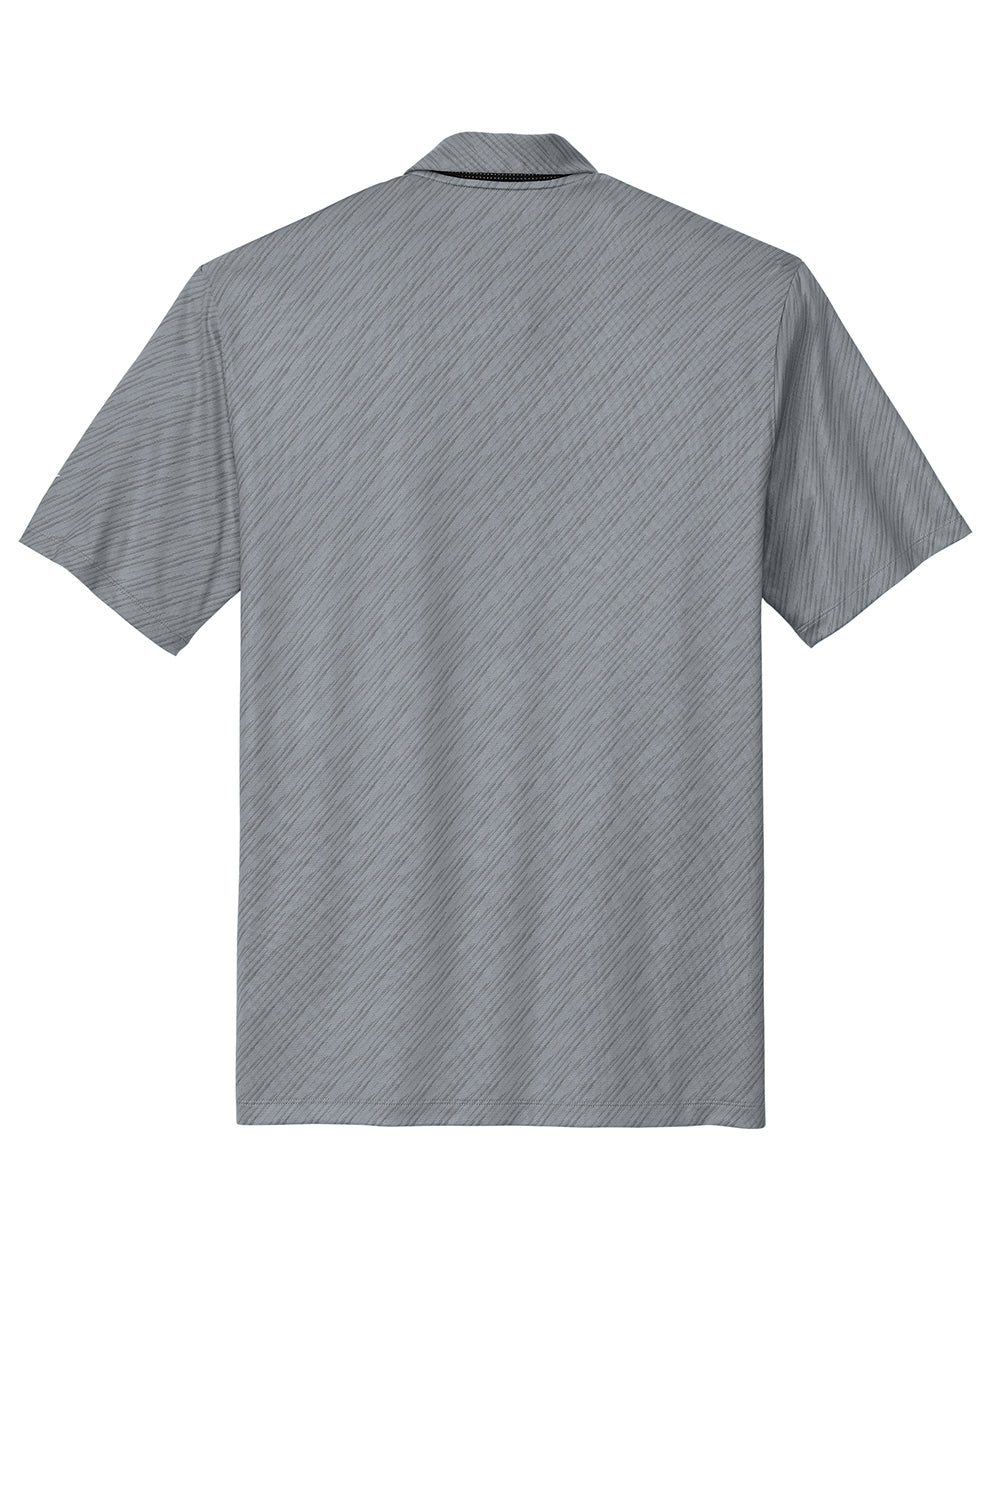 Nike NKDX6688 Mens Vapor Dash Dri-Fit Moisture Wicking Short Sleeve Polo Shirt Cool Grey Flat Back